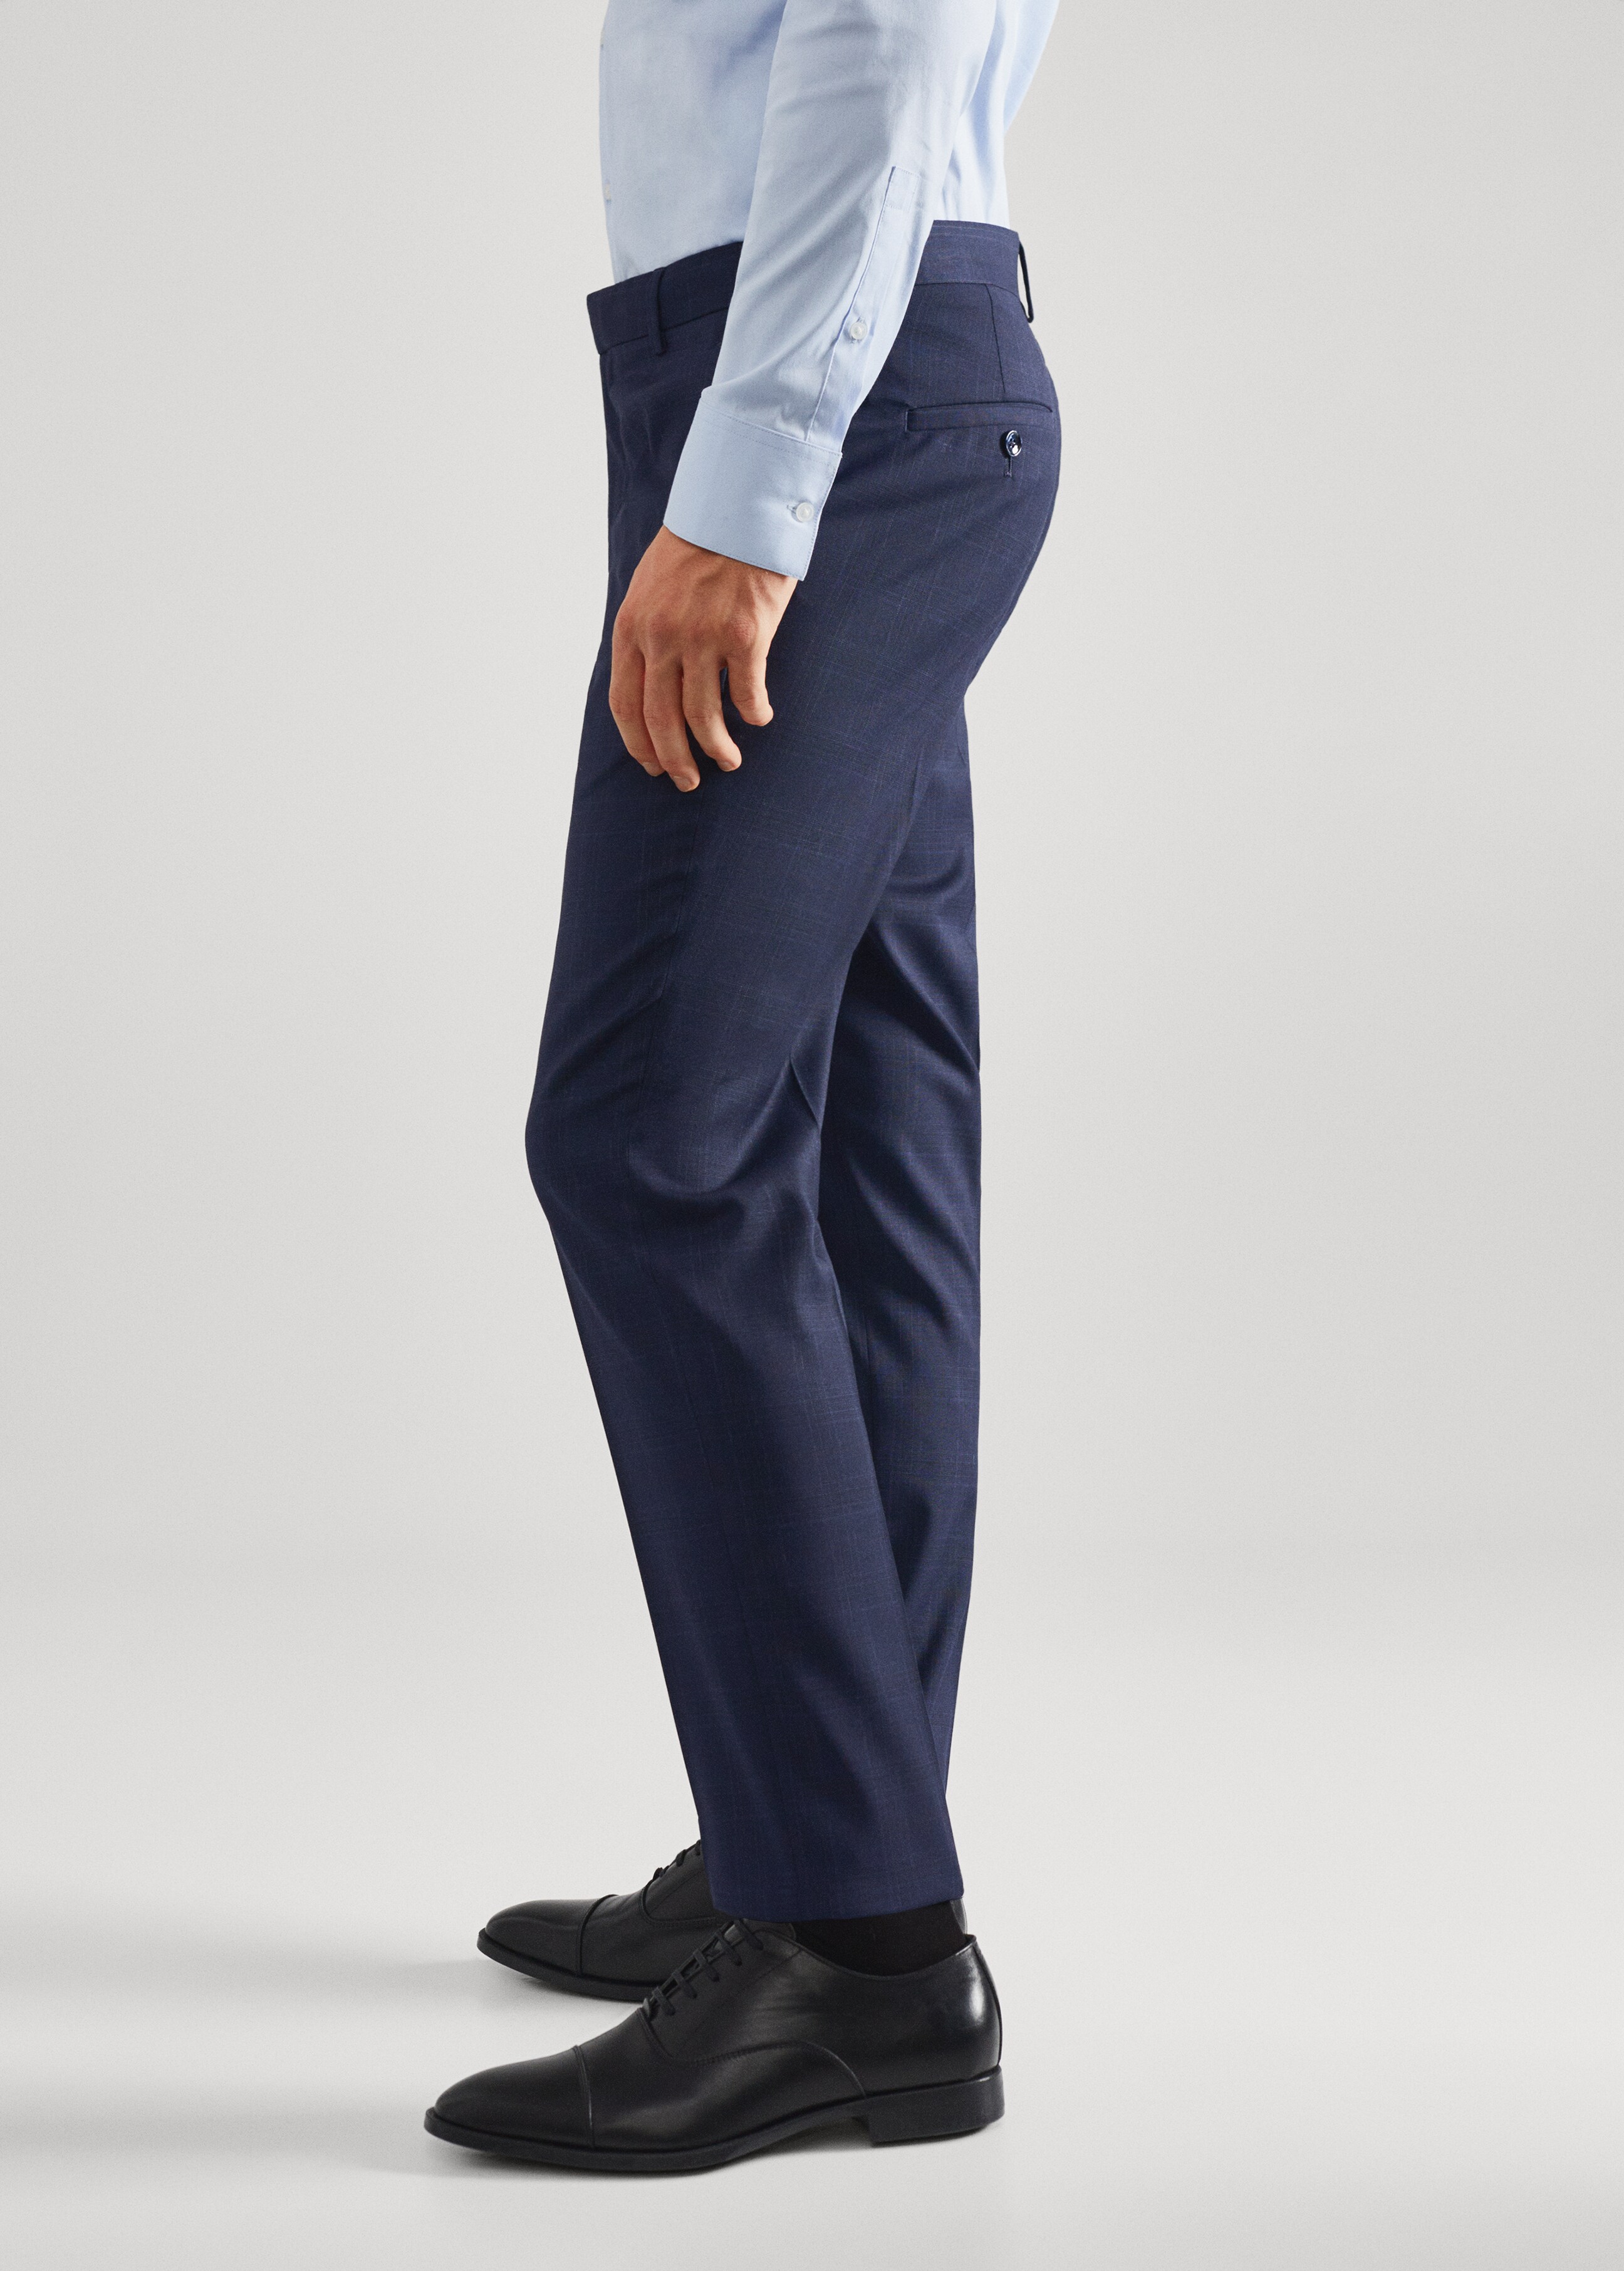 Super slim fit suit trousers - Details of the article 4